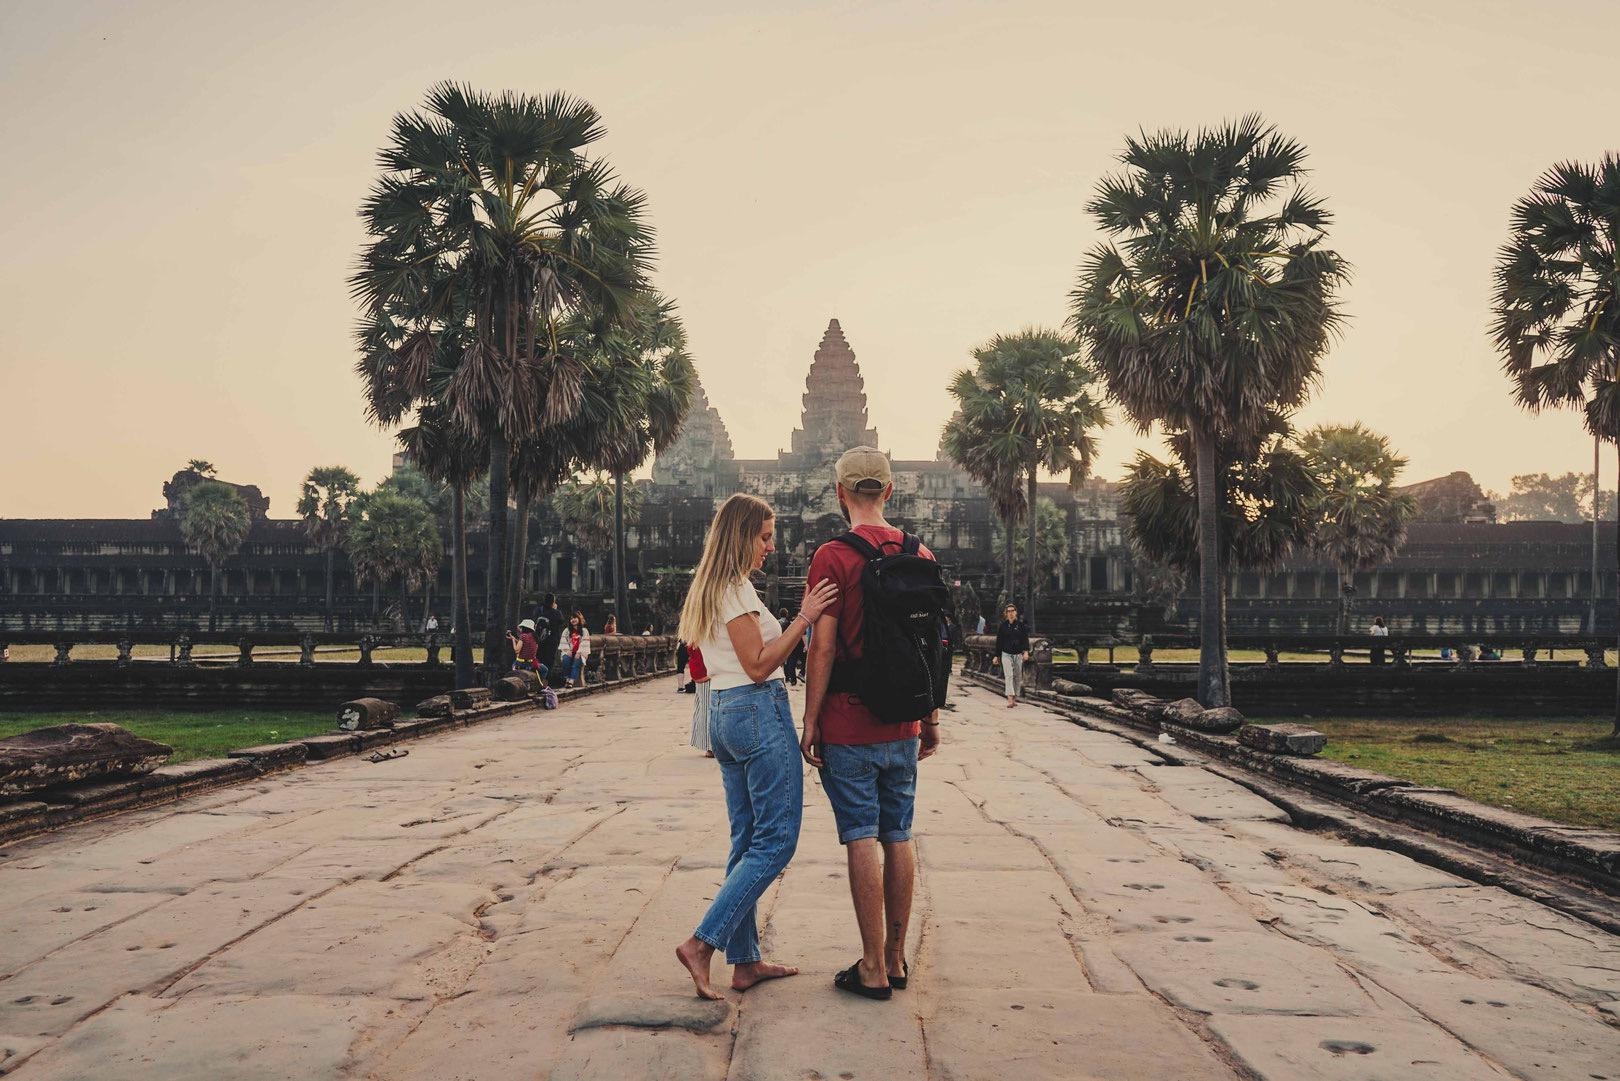 Angkor Wat ist die bekannteste Tempelanlage in der Region Angkor in Kambodscha. #angkorwat #asien #reisen #leben 